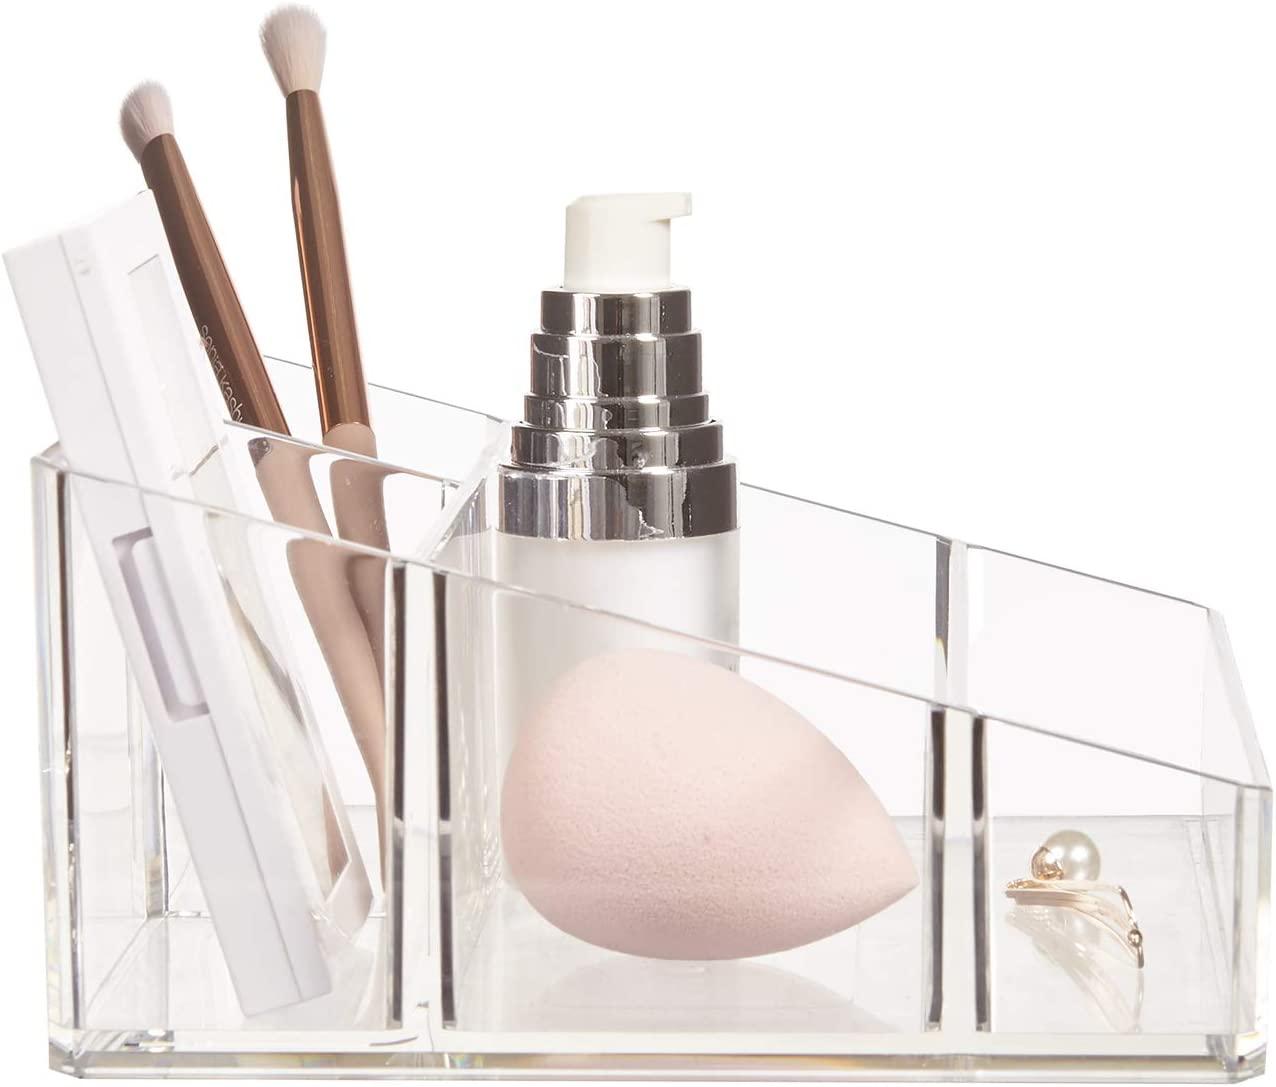  STORi Clear Plastic Multi-Level Vanity Organizer, Rectangular  4-Tier Holder for Makeup, Eyeshadow Palettes, & up to 40 Nail Polish  Bottles